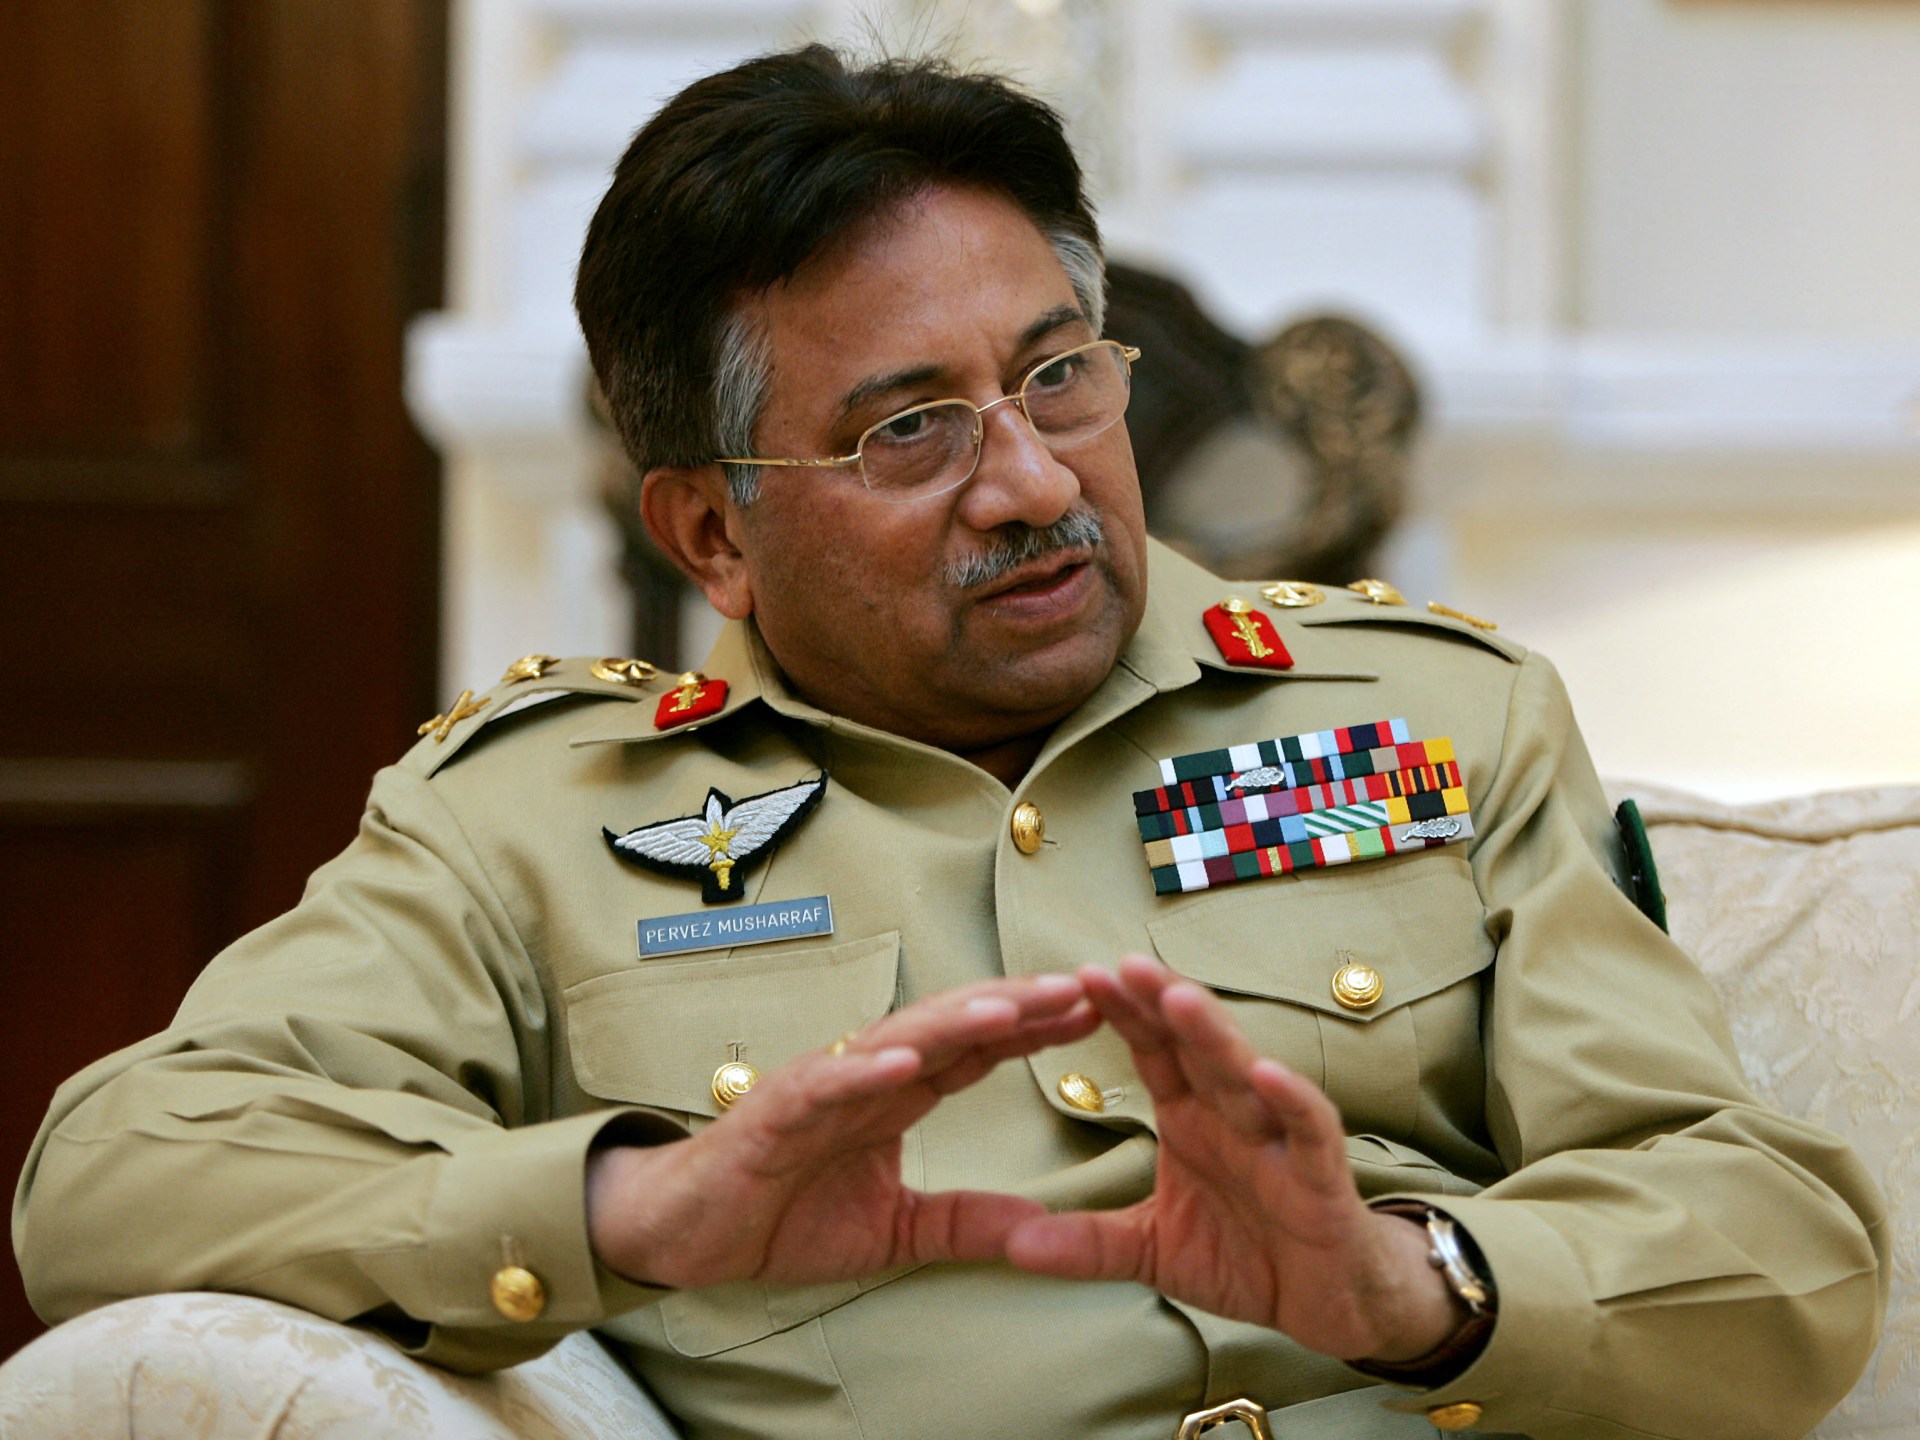 Pakistani former President Pervez Musharraf dies aged 79